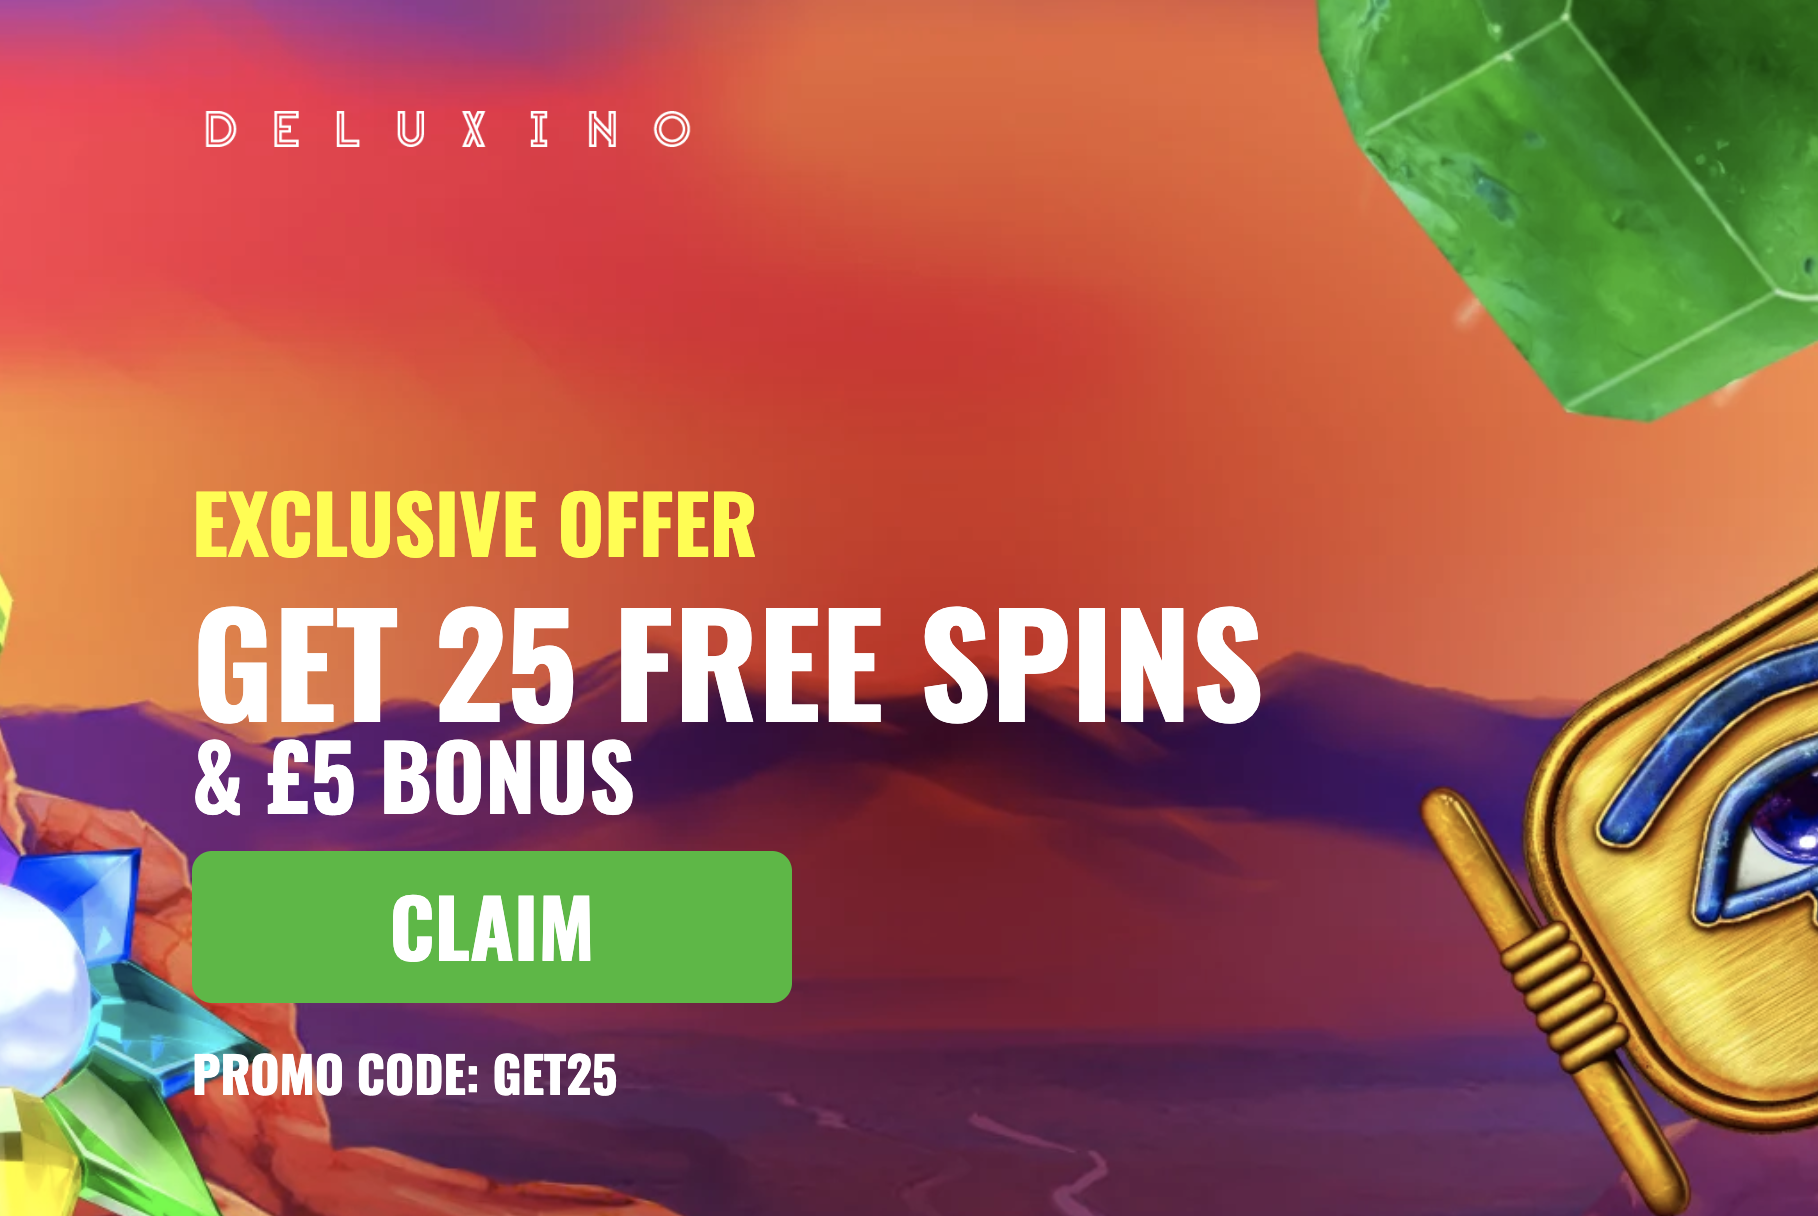 Deluxino 25 Free Spins